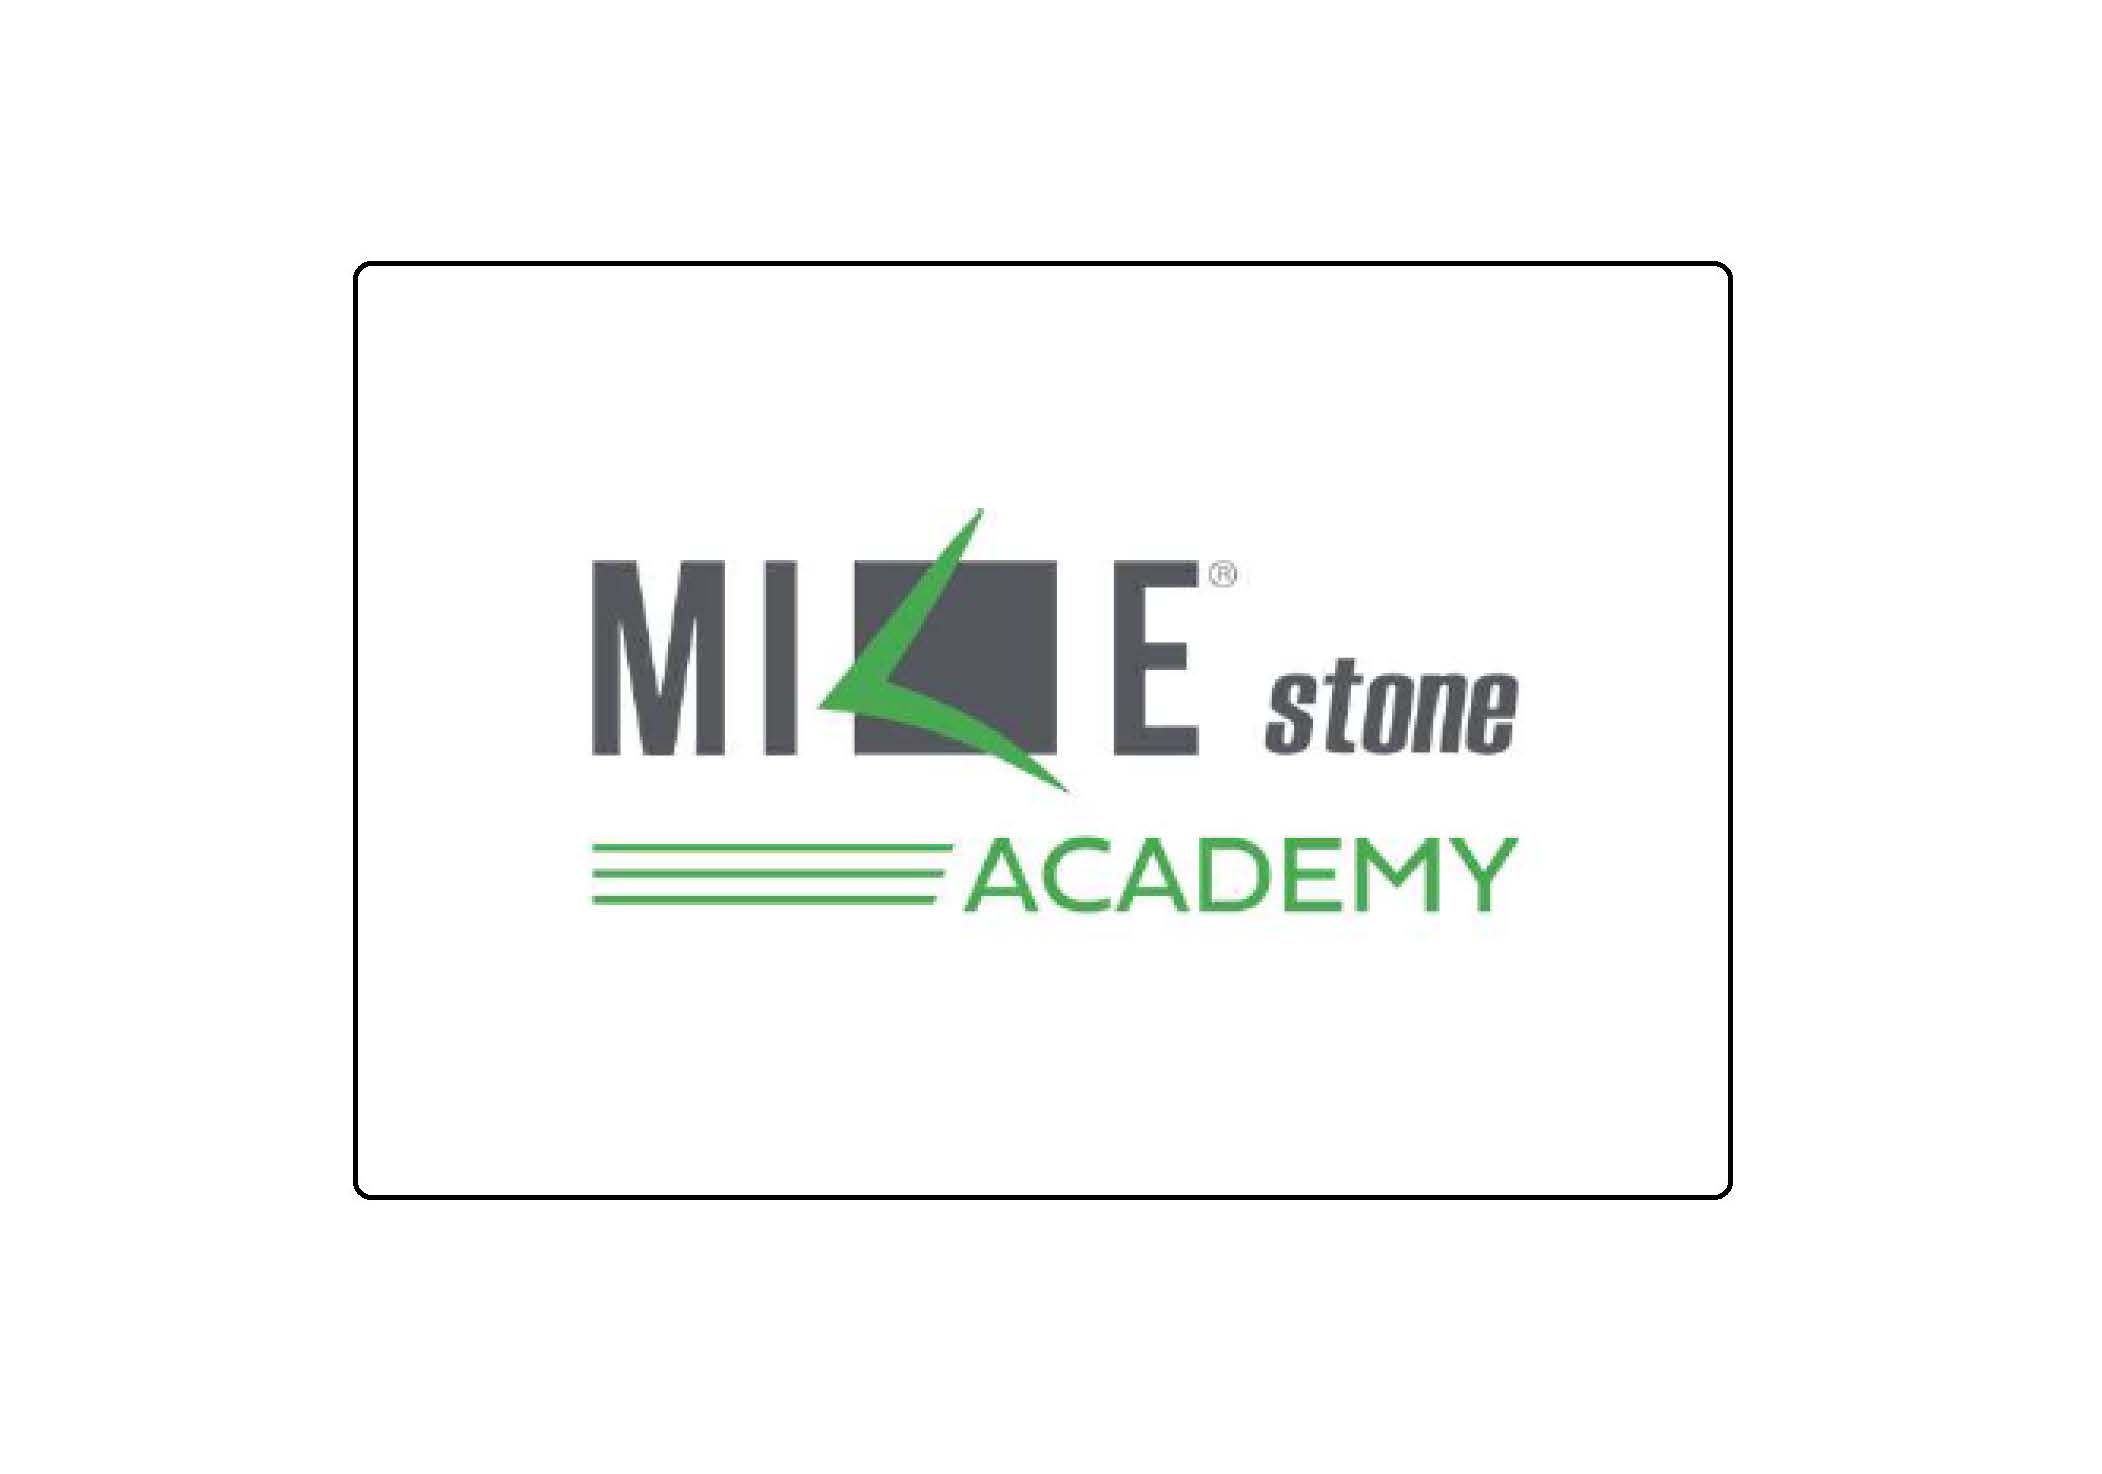 Milestone Academy Logo